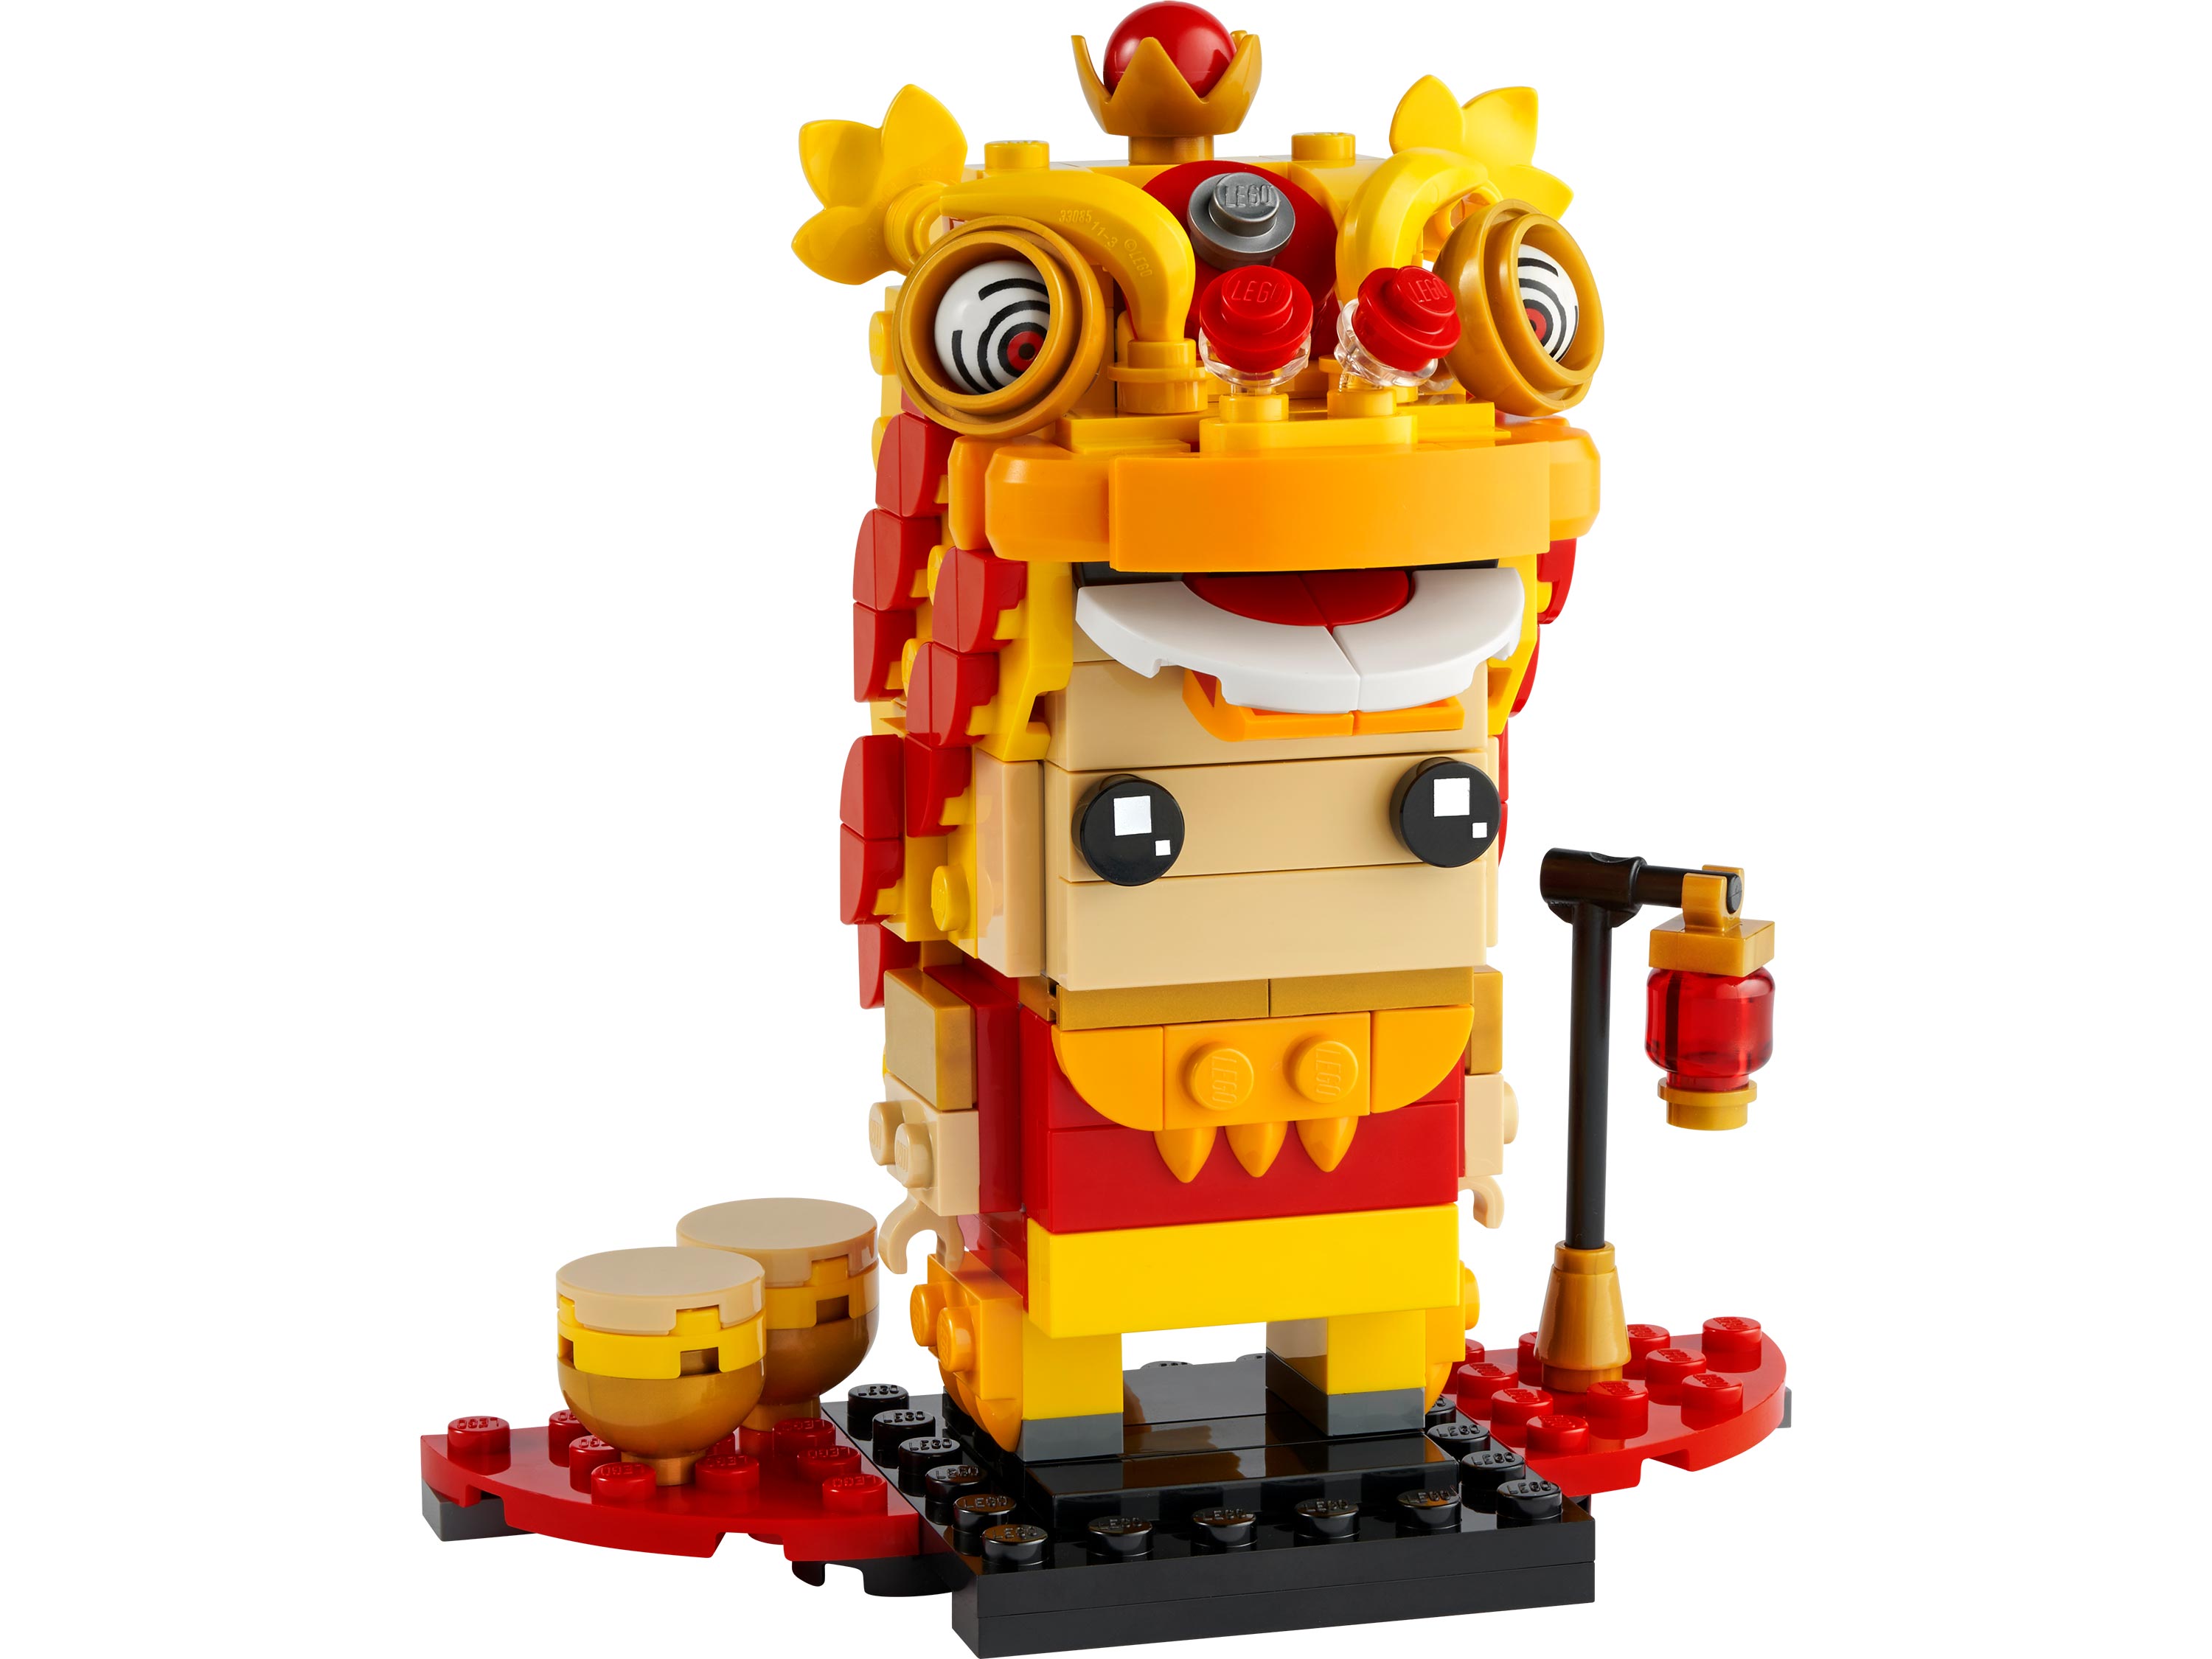 LEGO BrickHeadz 40540 Исполняющий танец льва